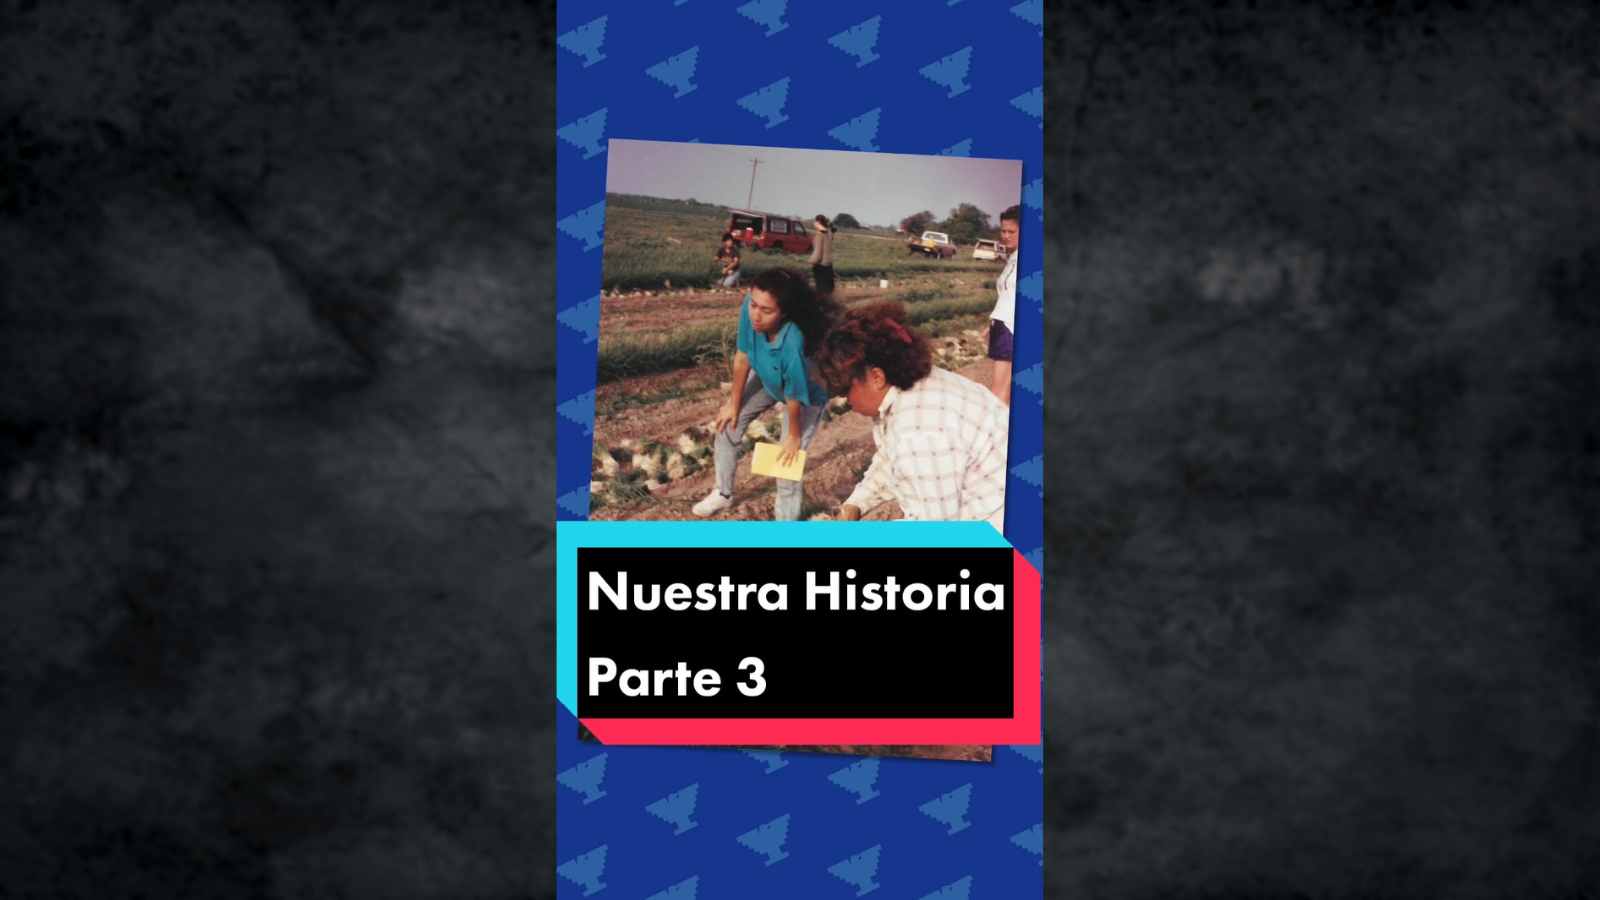 Featured image for “‘Nuestra Historia' Episodio 3”